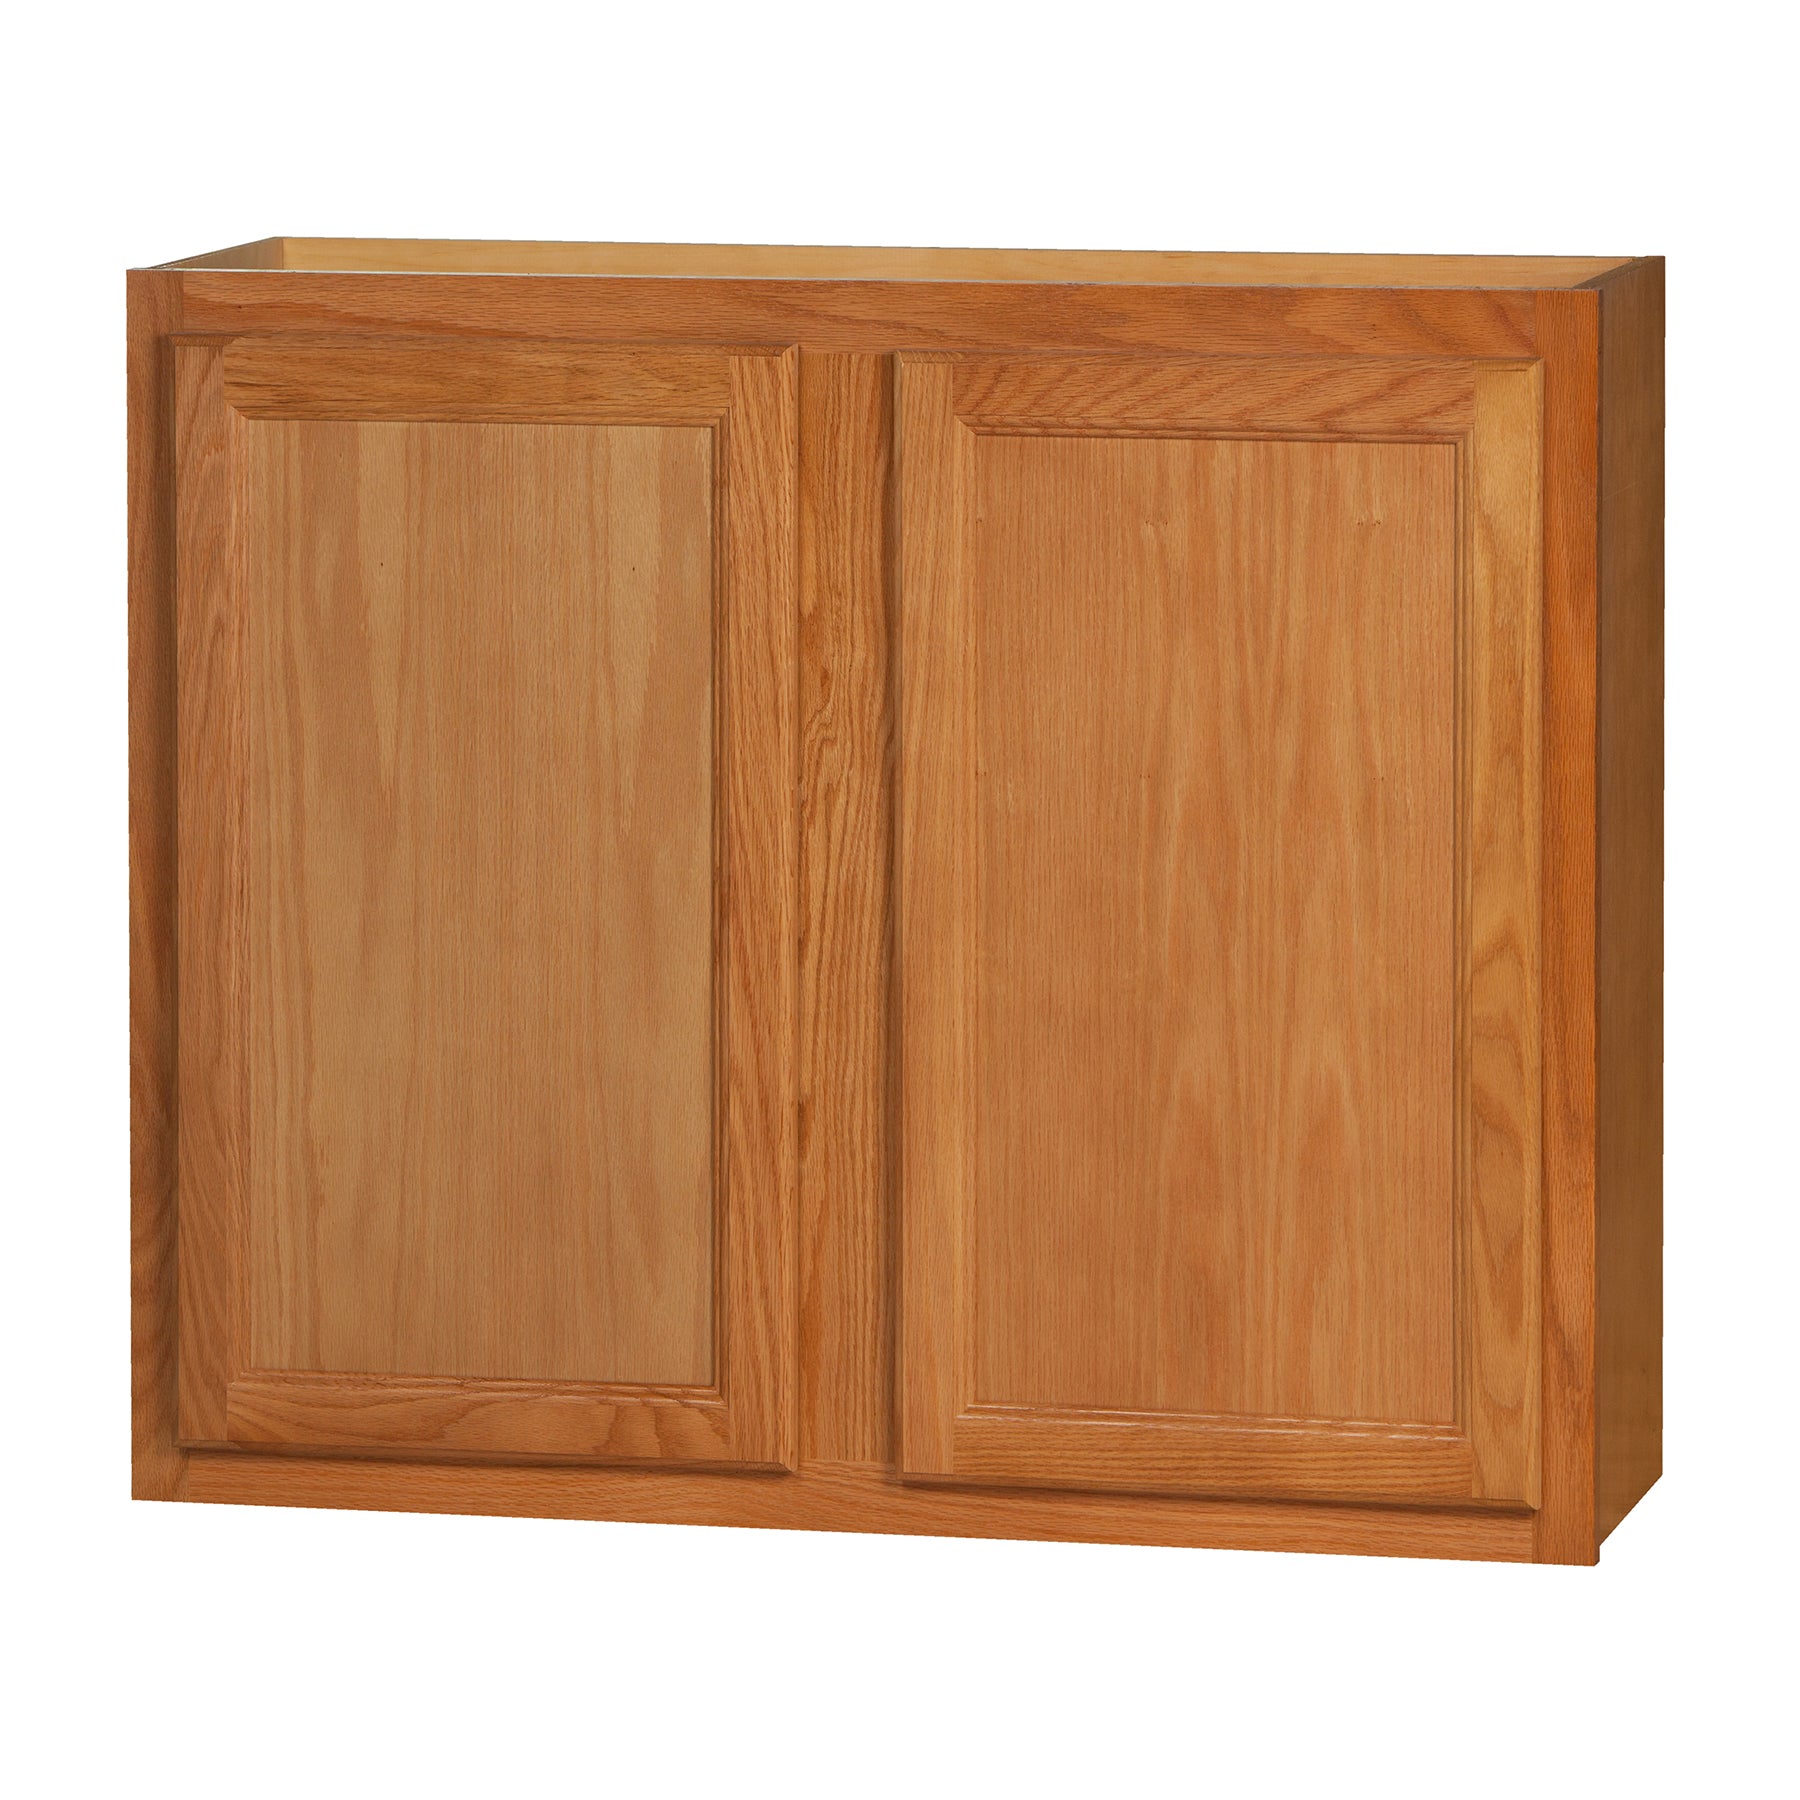 30 inch Wall Cabinets - Chadwood Shaker - 36 Inch W x 30 Inch H x 12 Inch D